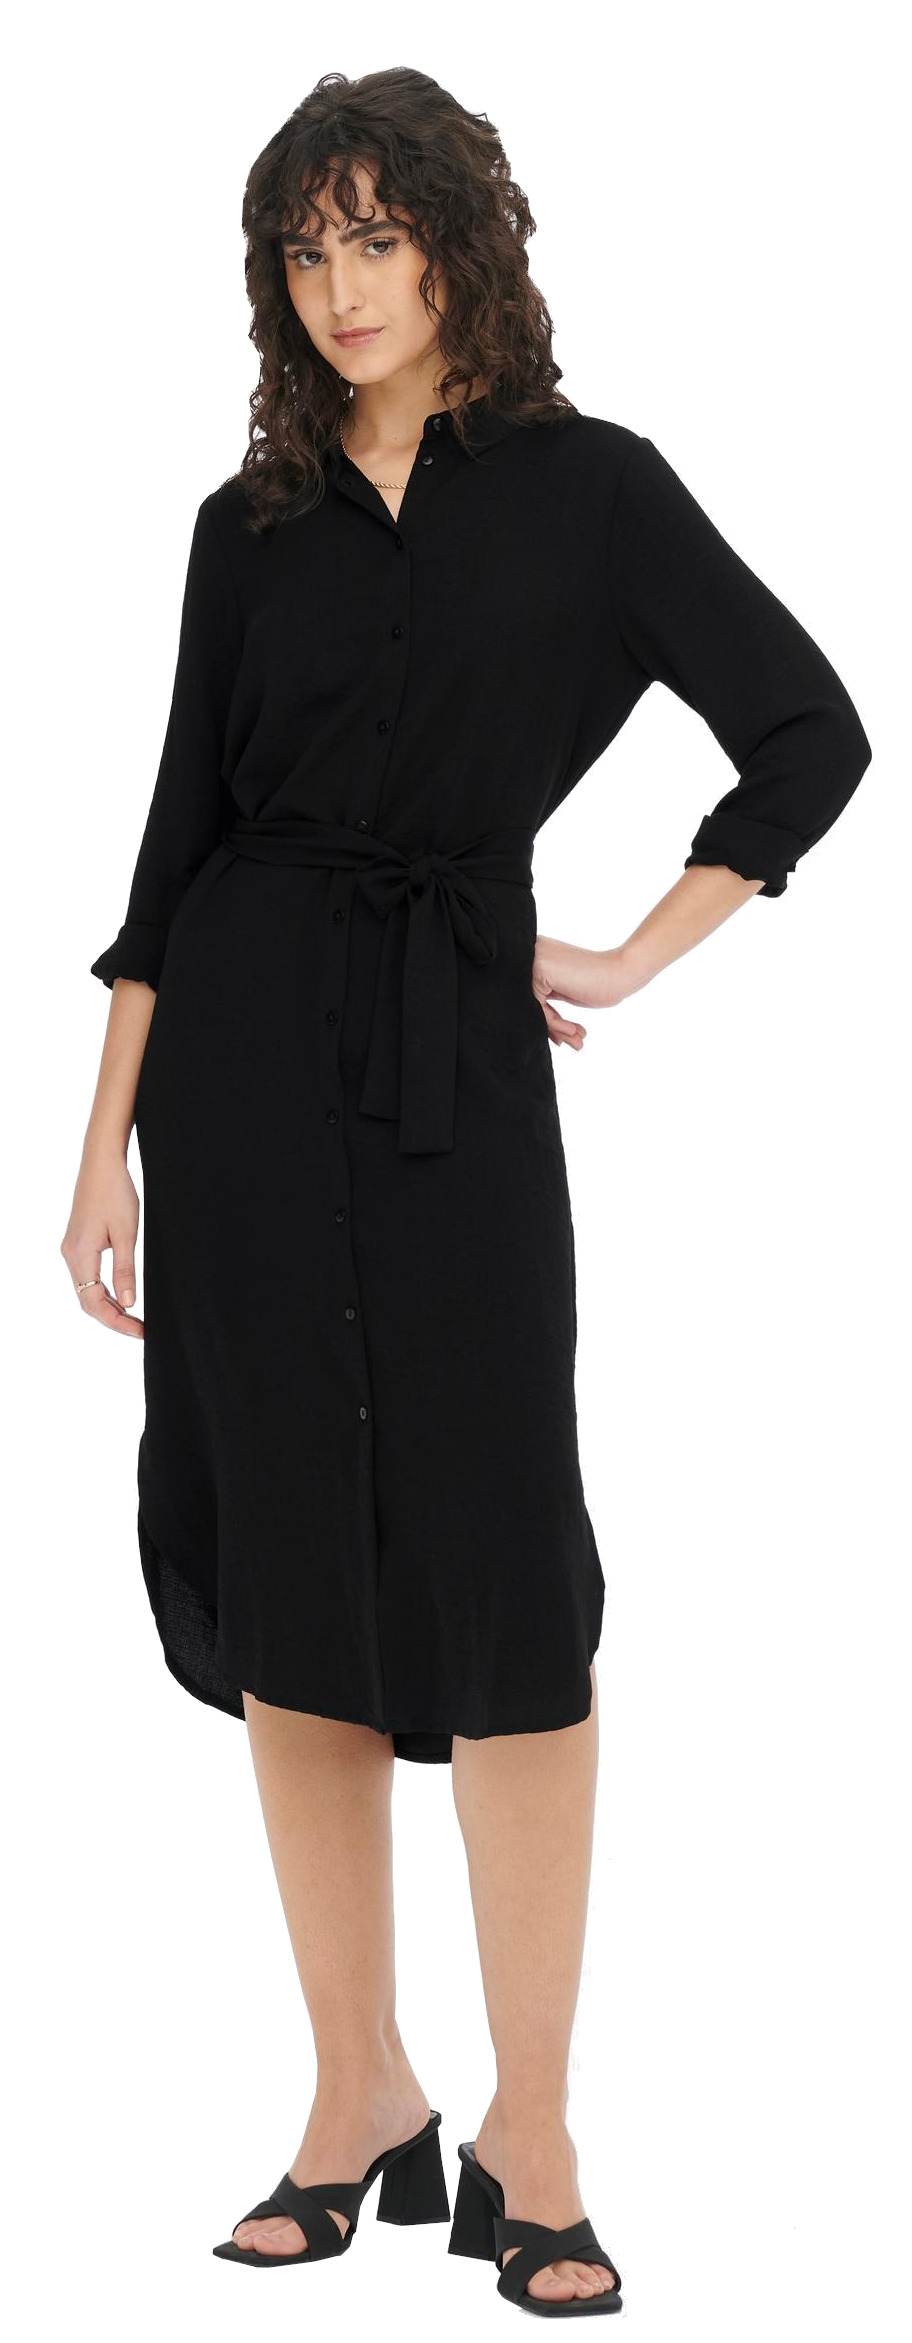 Jacqueline de Yong Dámske šaty JDYRACHEL Regular Fit 15267419 Black M